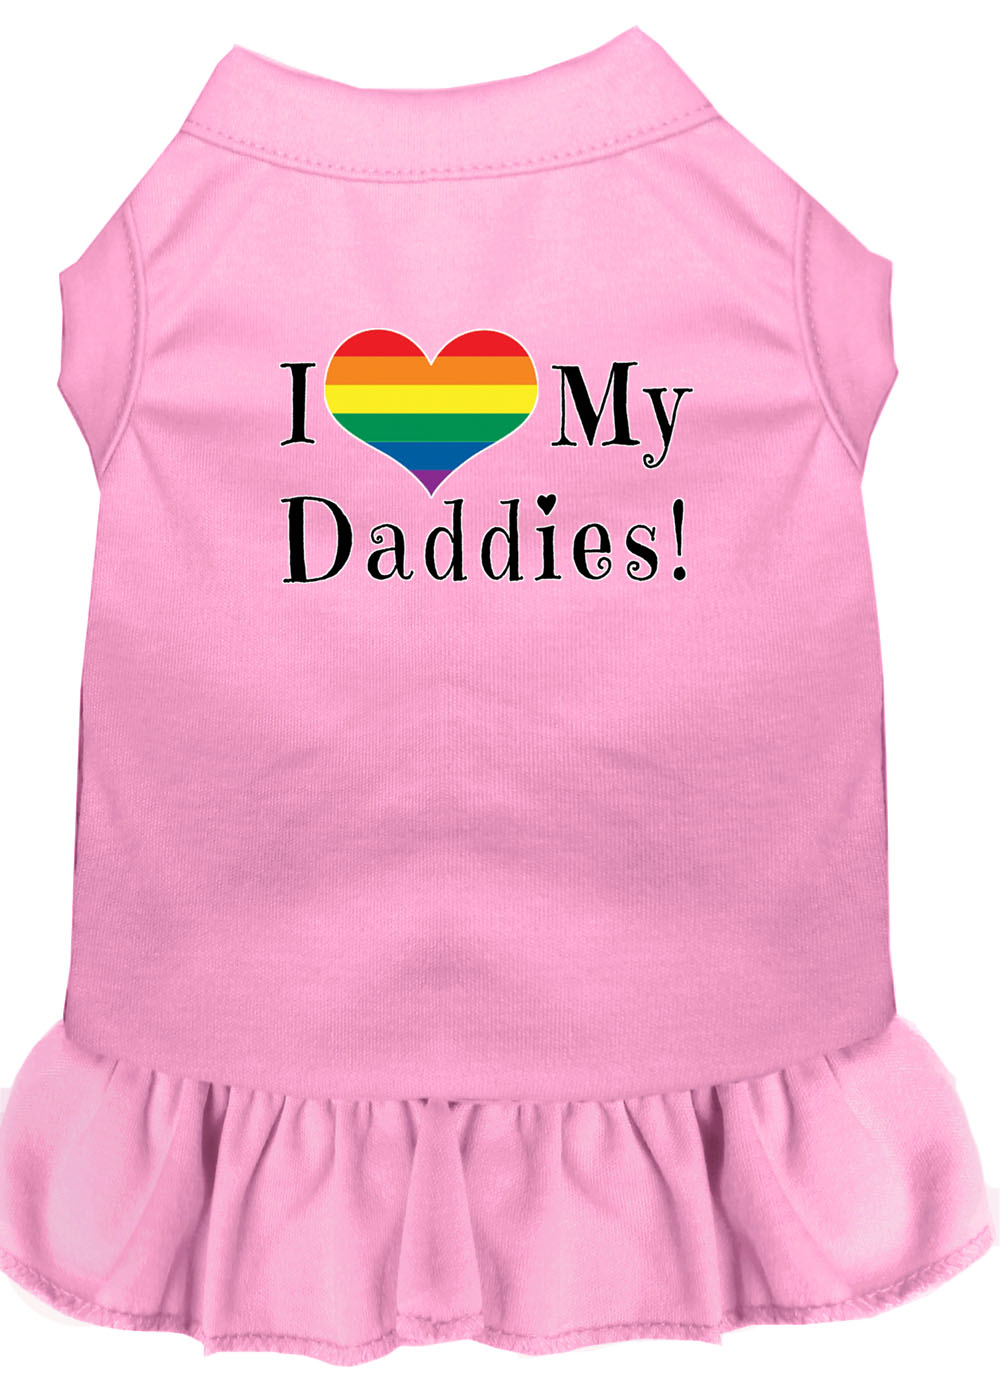 I Heart my Daddies Screen Print Dog Dress Light Pink XL